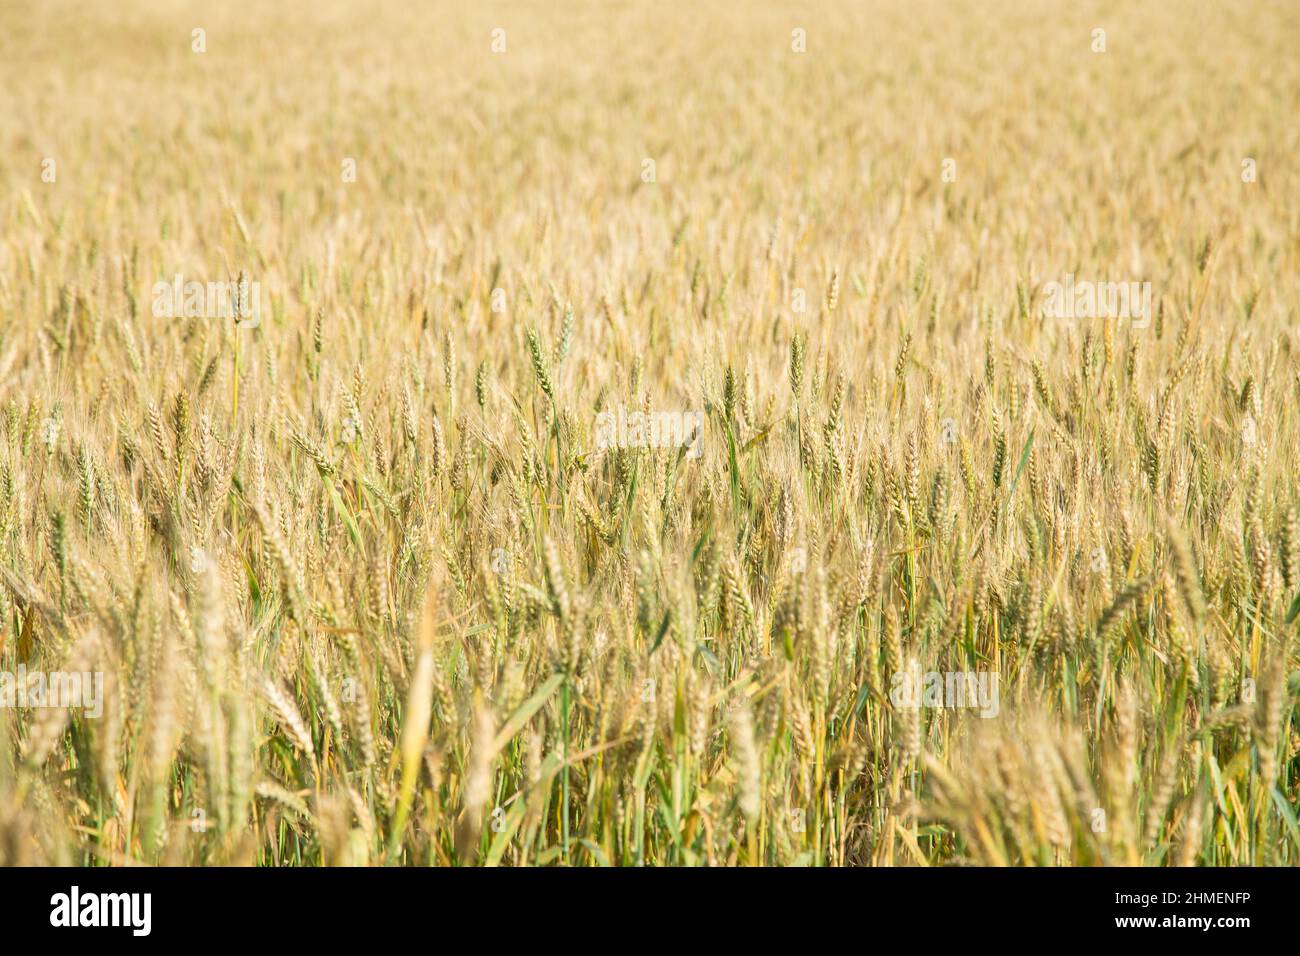 Gold wheat field, yellow spike, whole background Stock Photo